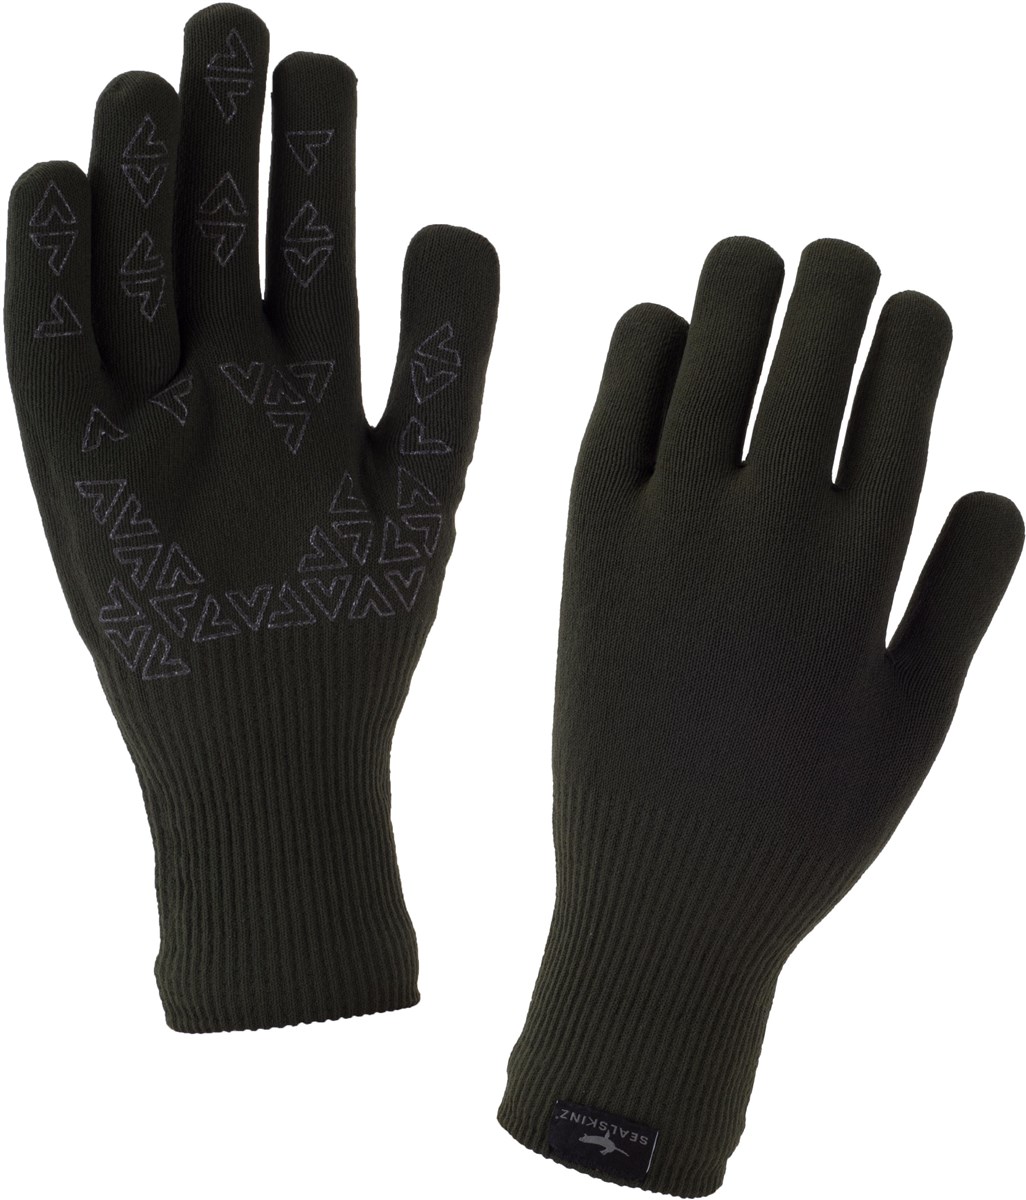 Sealskinz Outdoor Long Finger Gloves product image